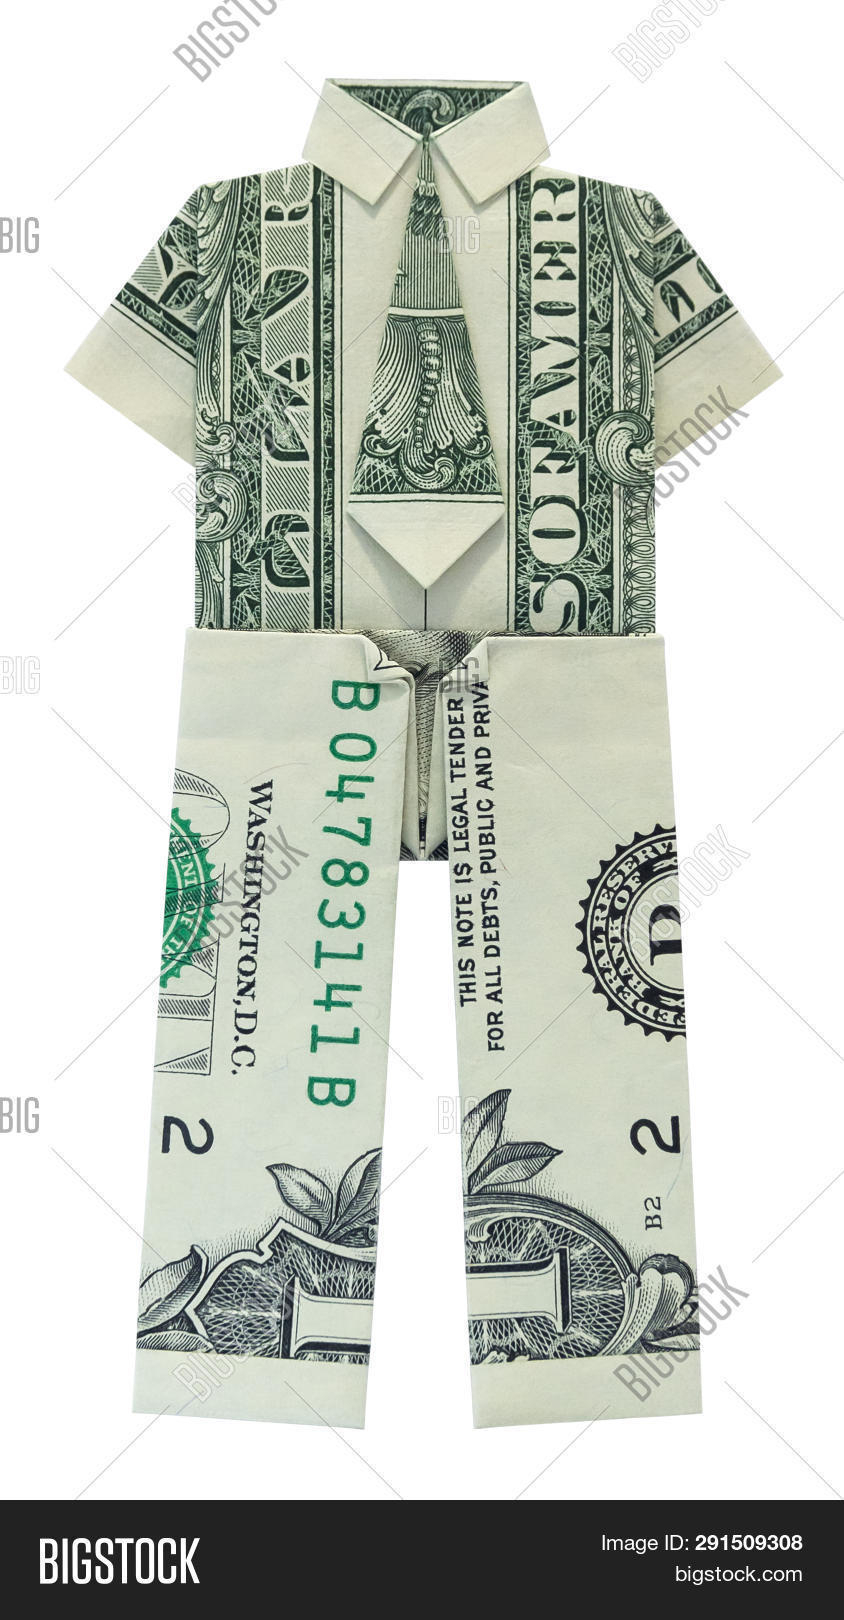 Shirt And Tie Money Origami Money Origami Shirt Image Photo Free Trial Bigstock